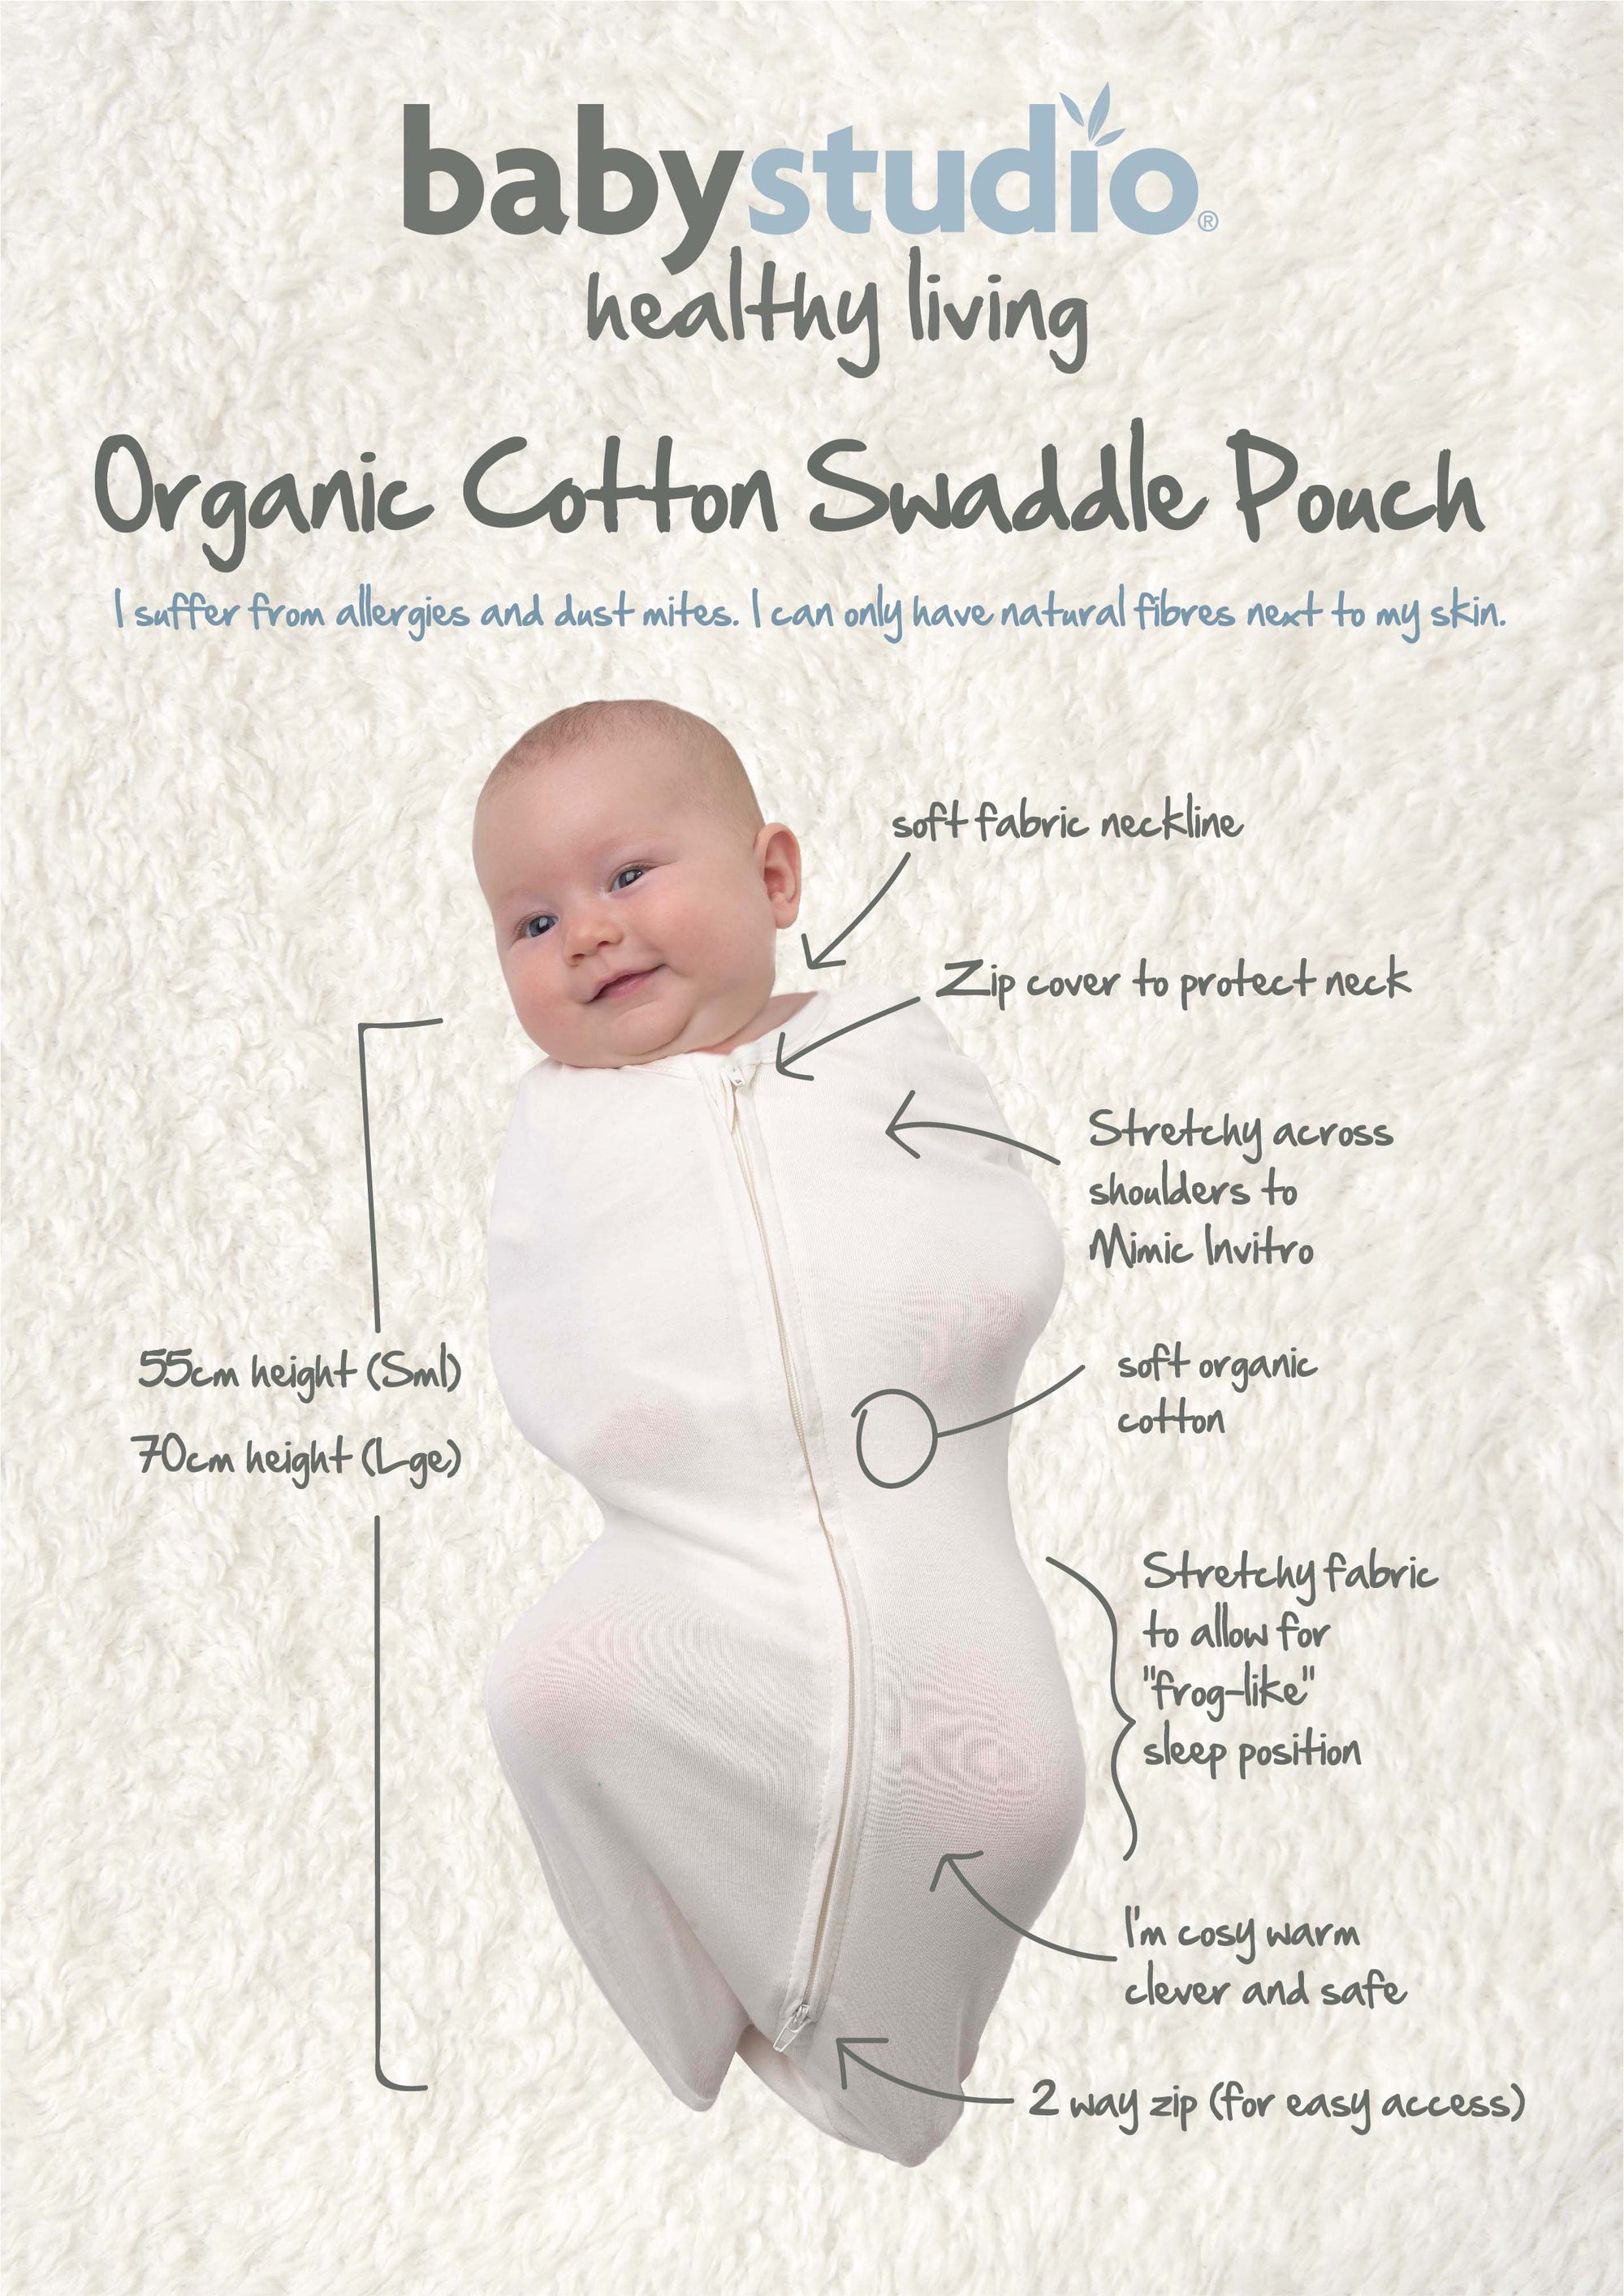 swaddlepouch organic cotton large (3-9m) - various designs